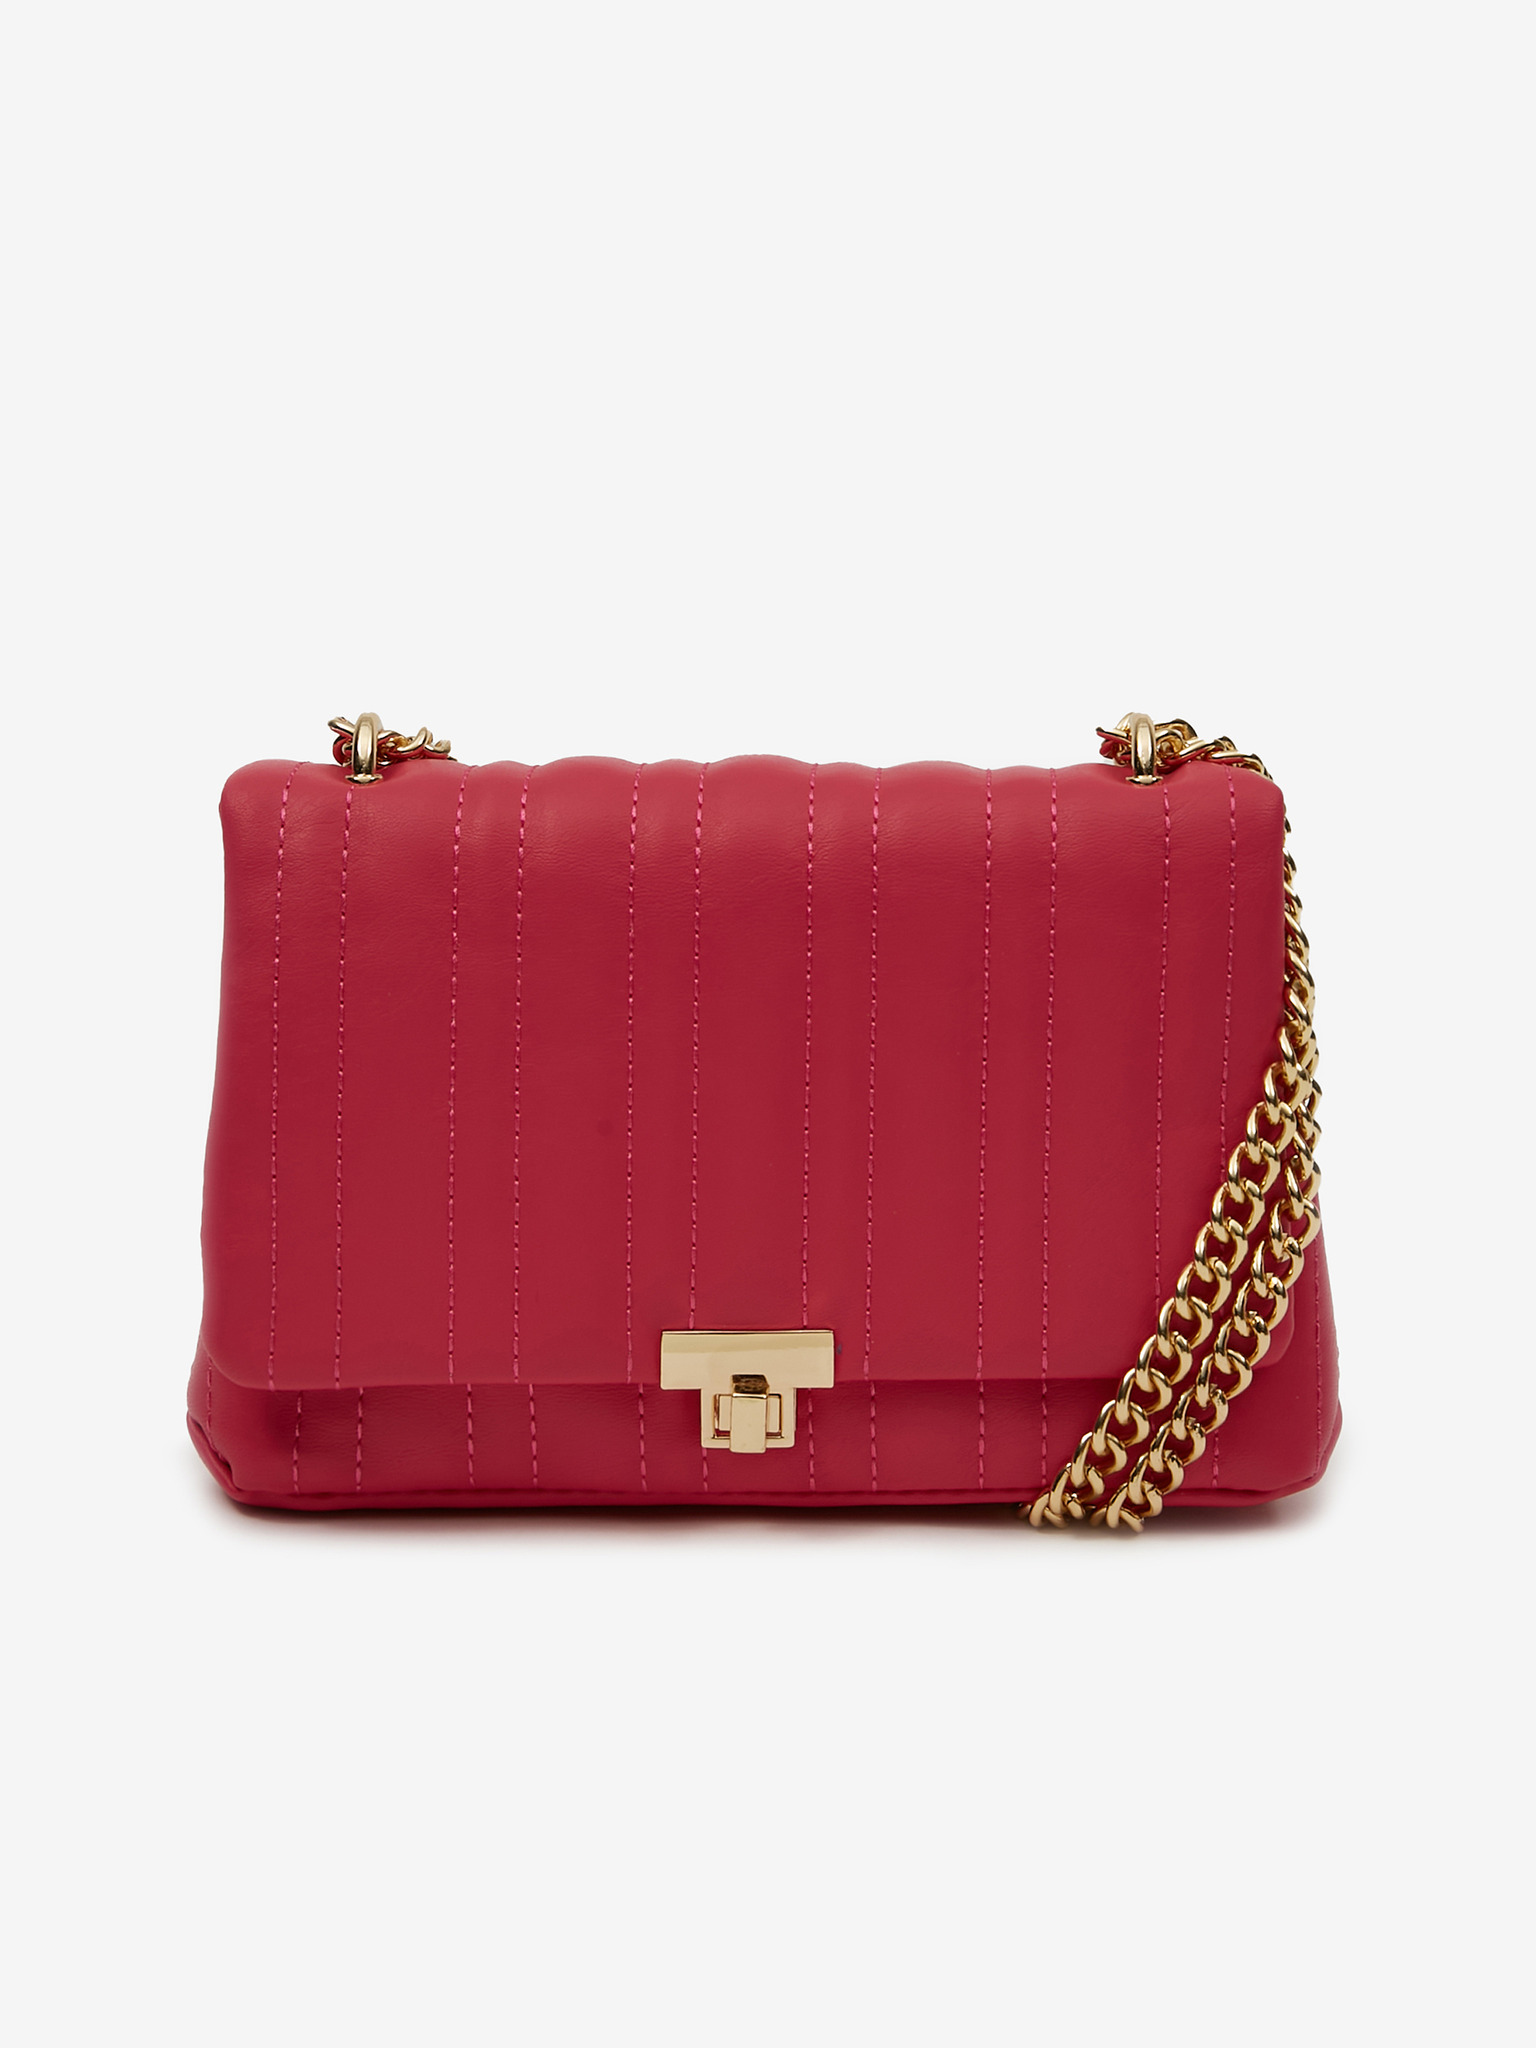 Orsay crossbody/ handbag. Excellent condition. For 2690 Size 18 x 12 x 6 in  | Instagram